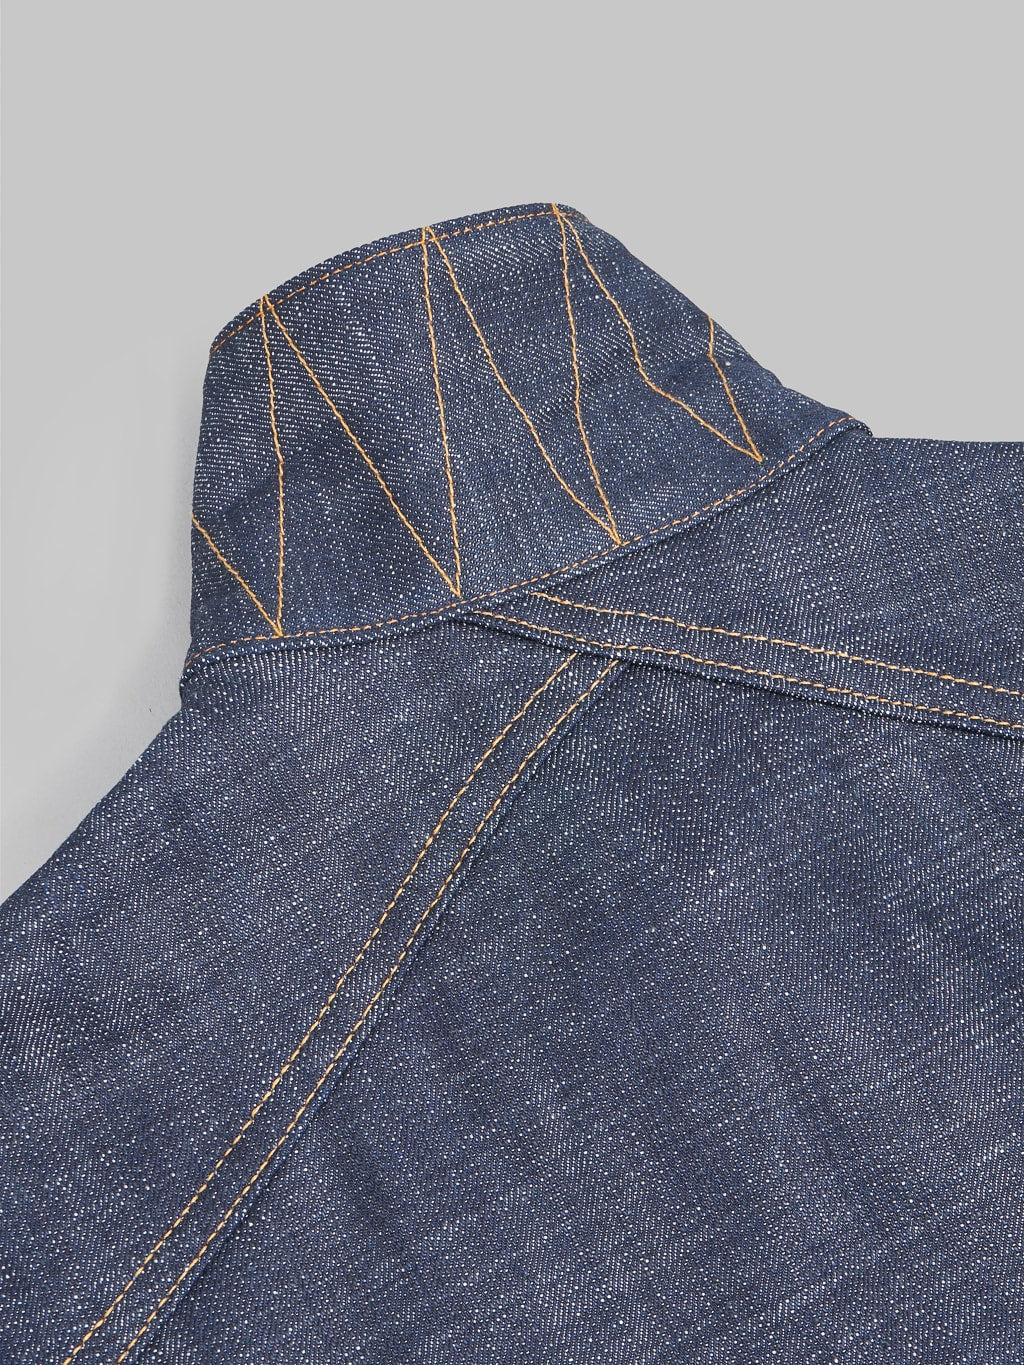 3sixteen 20th Anniversary Natural Indigo Type 3s Denim Jacket  back collar stitching